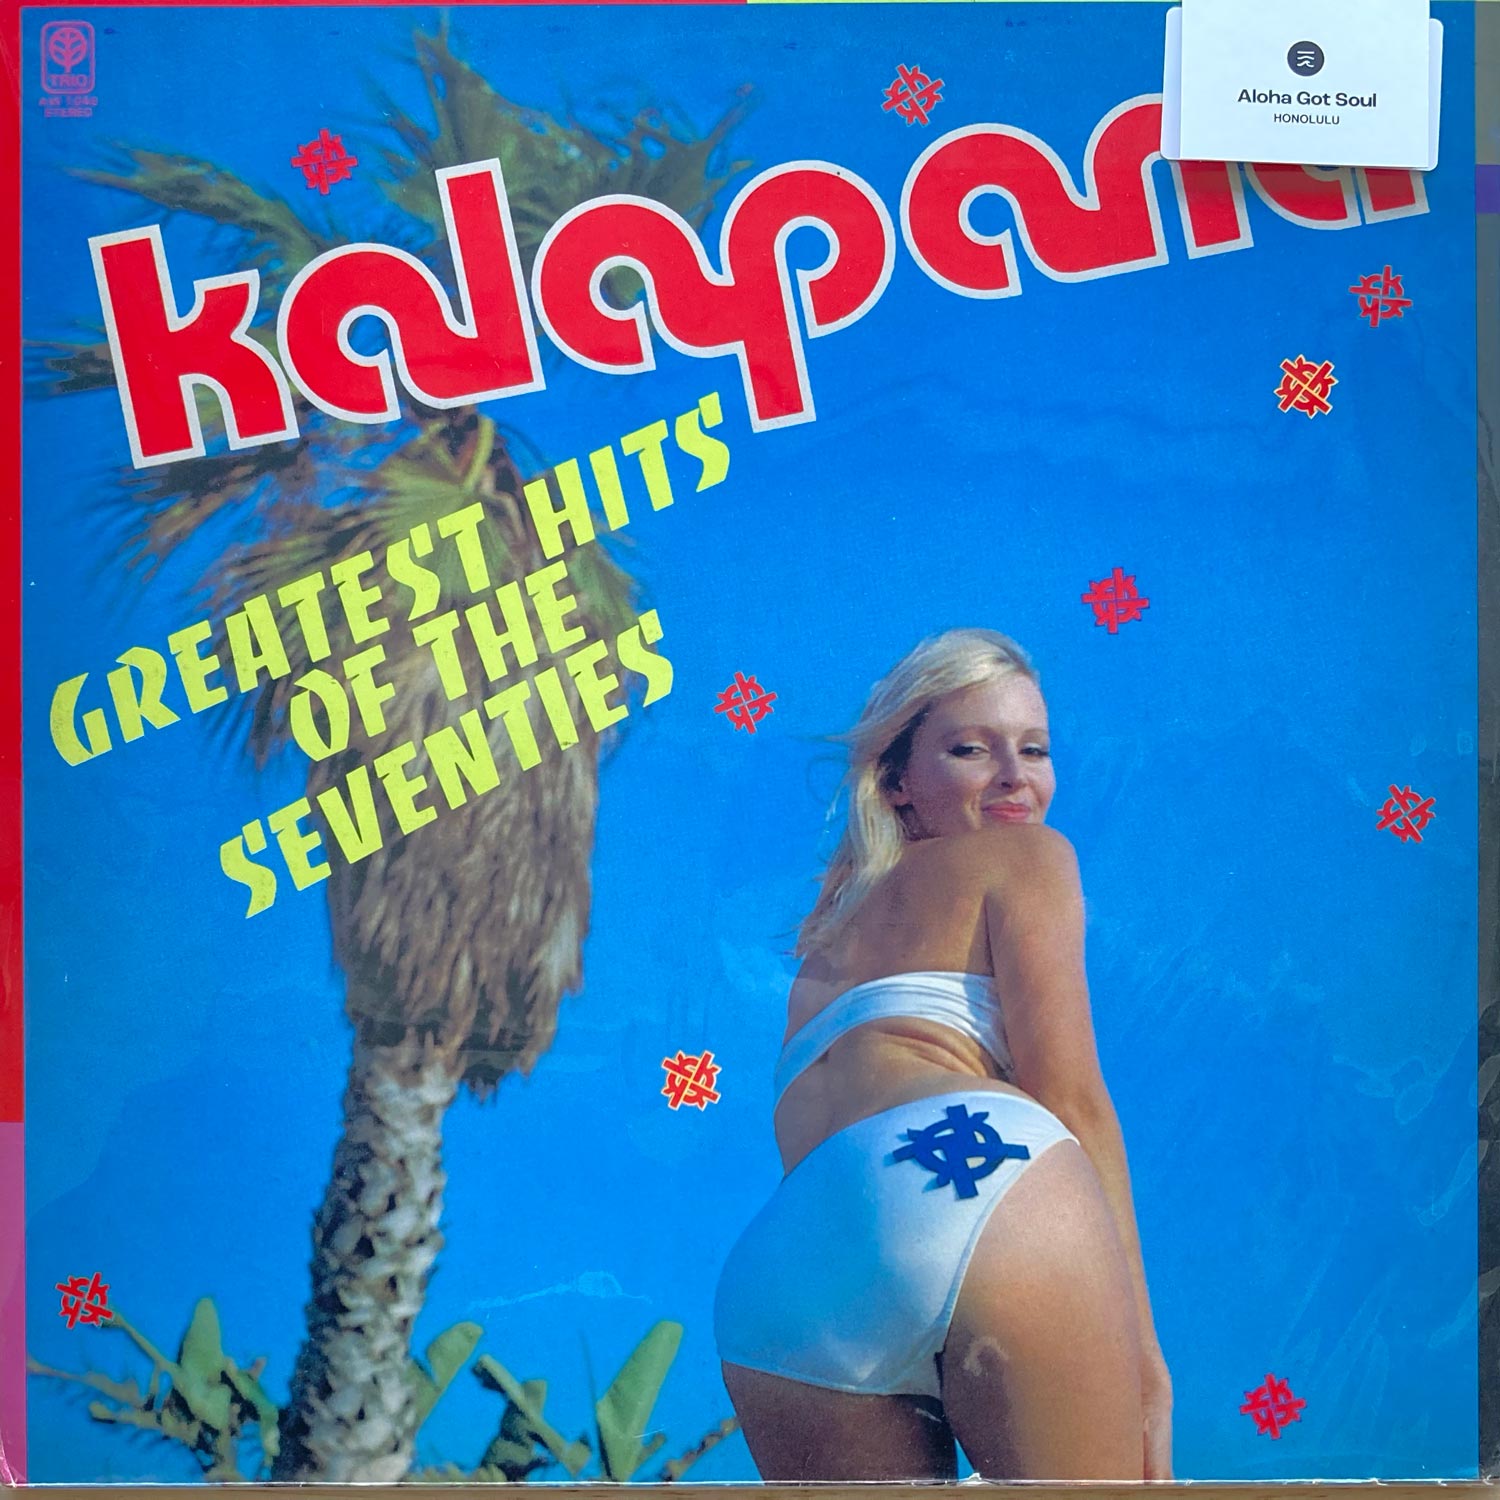 Kalapana - Greatest Hits of the Sevenites